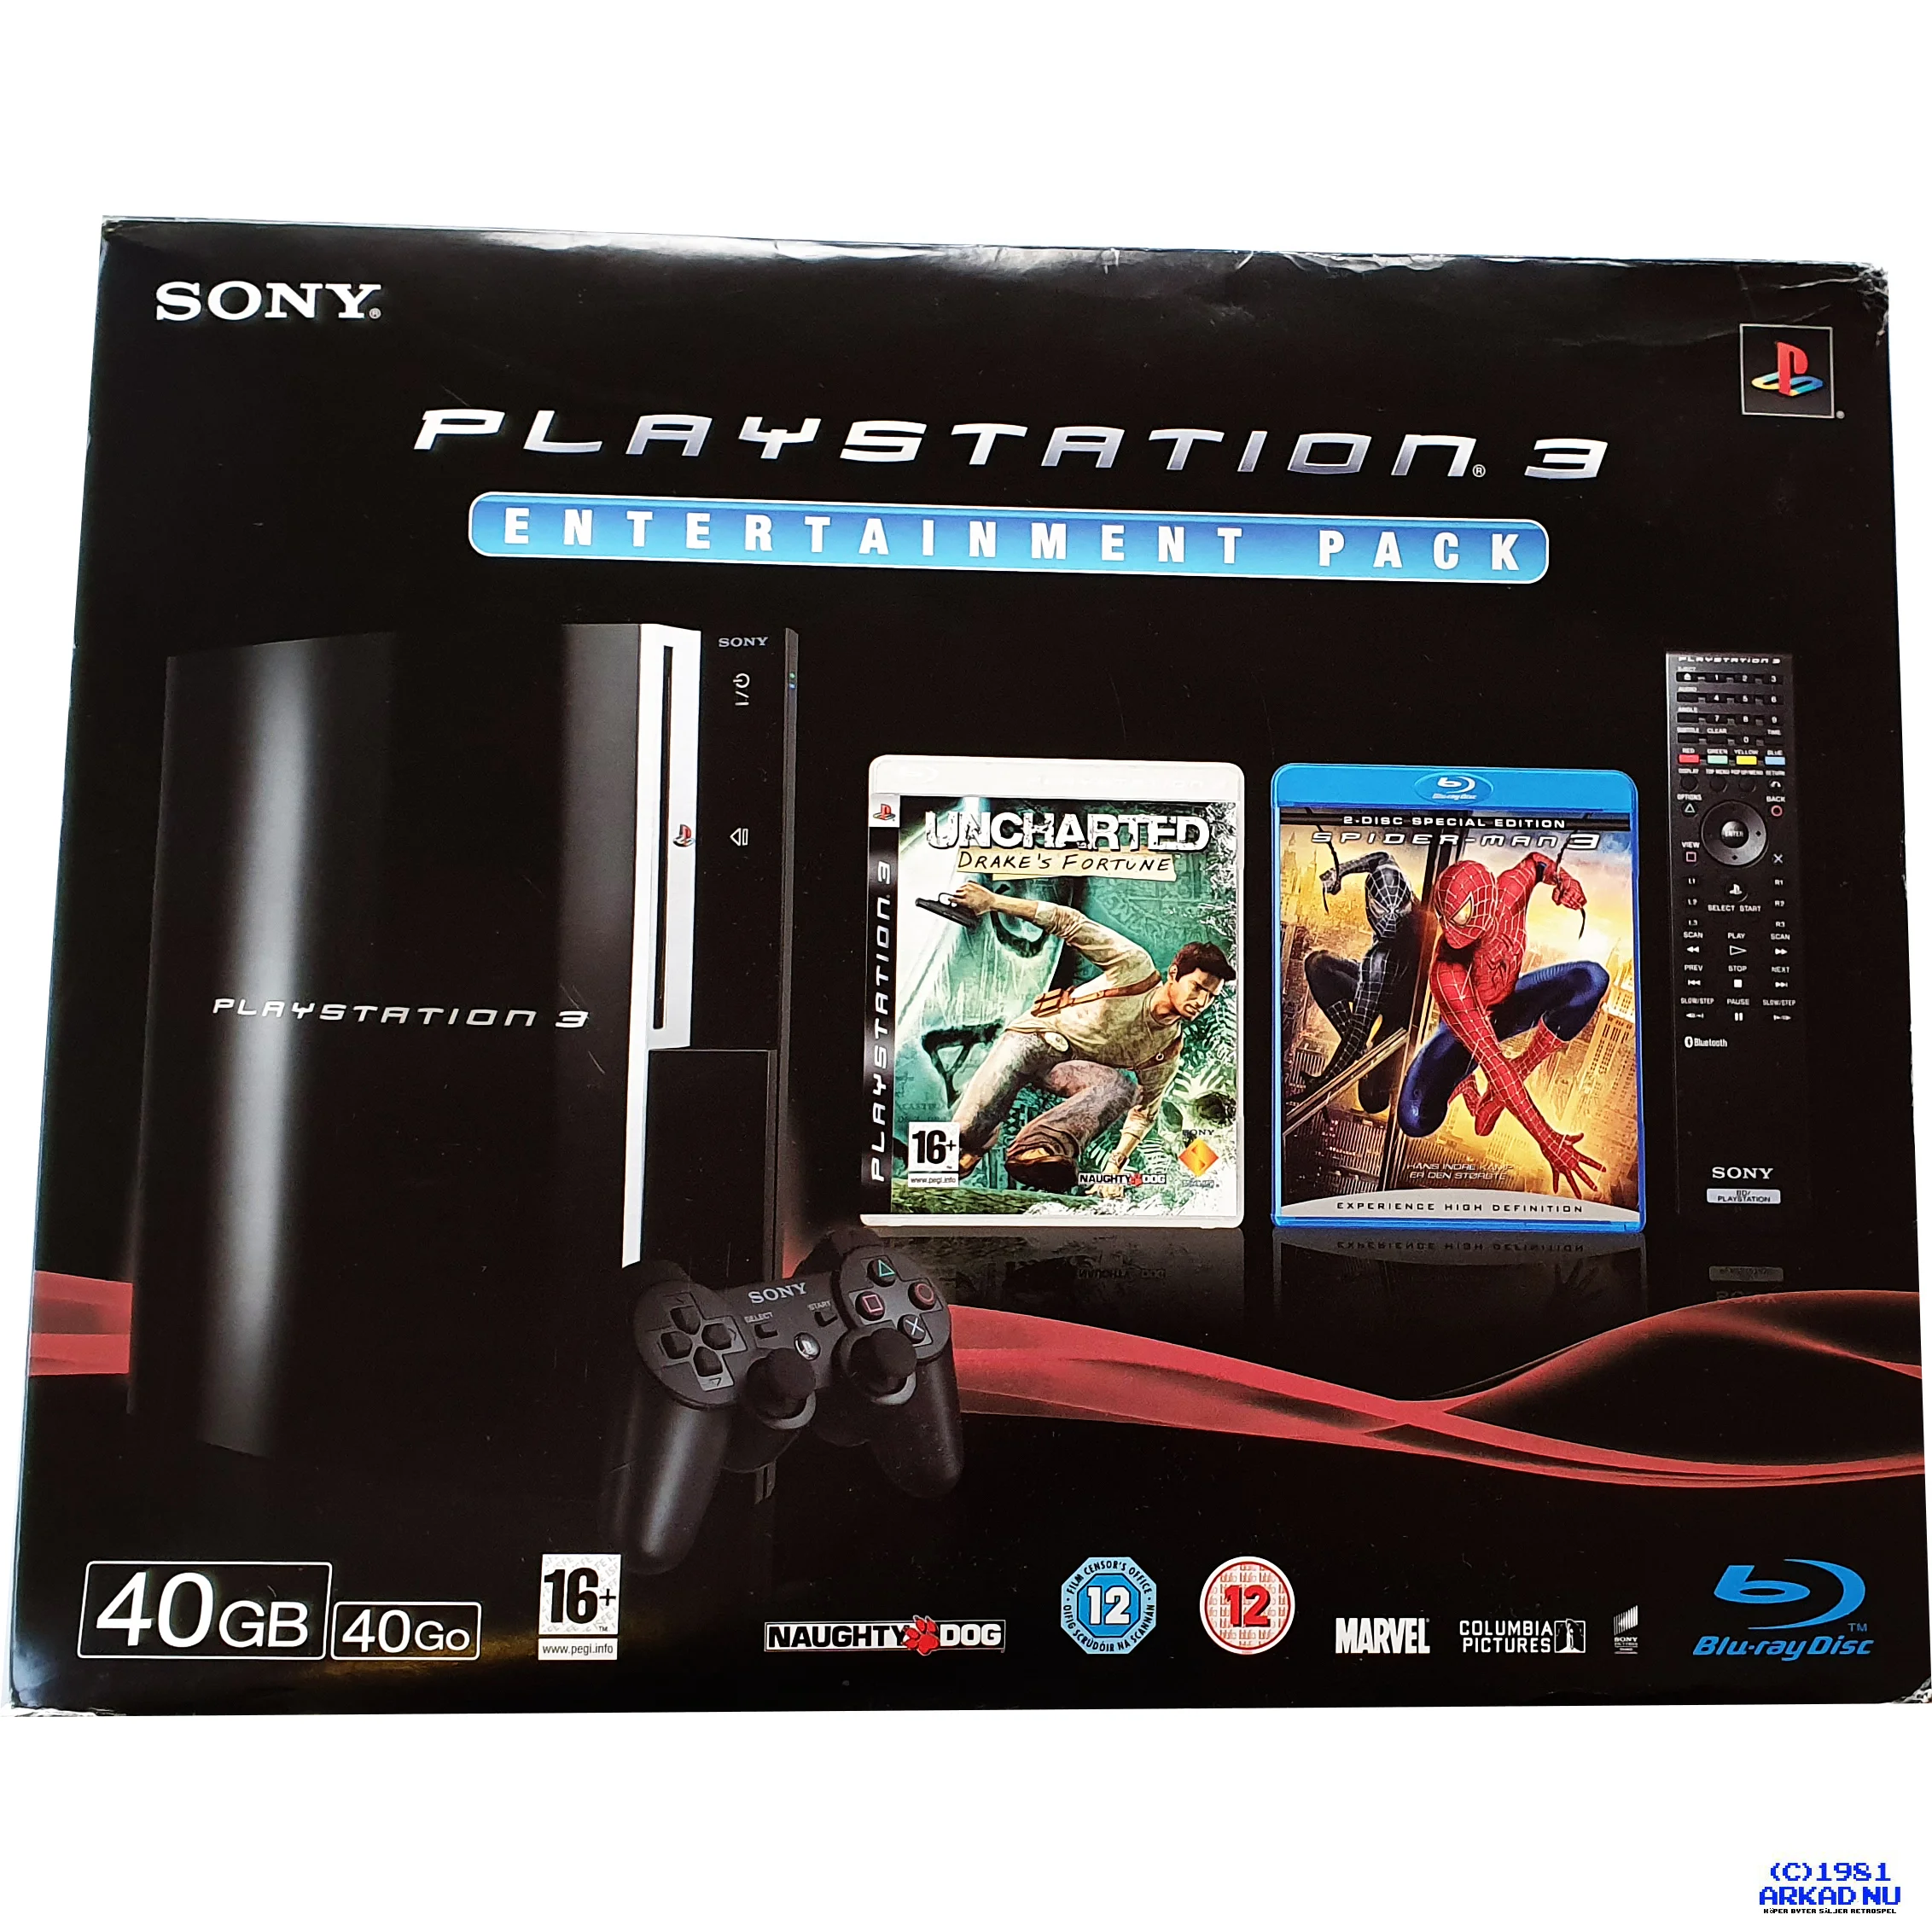  Sony Playstation 3 Entertainment Bundle